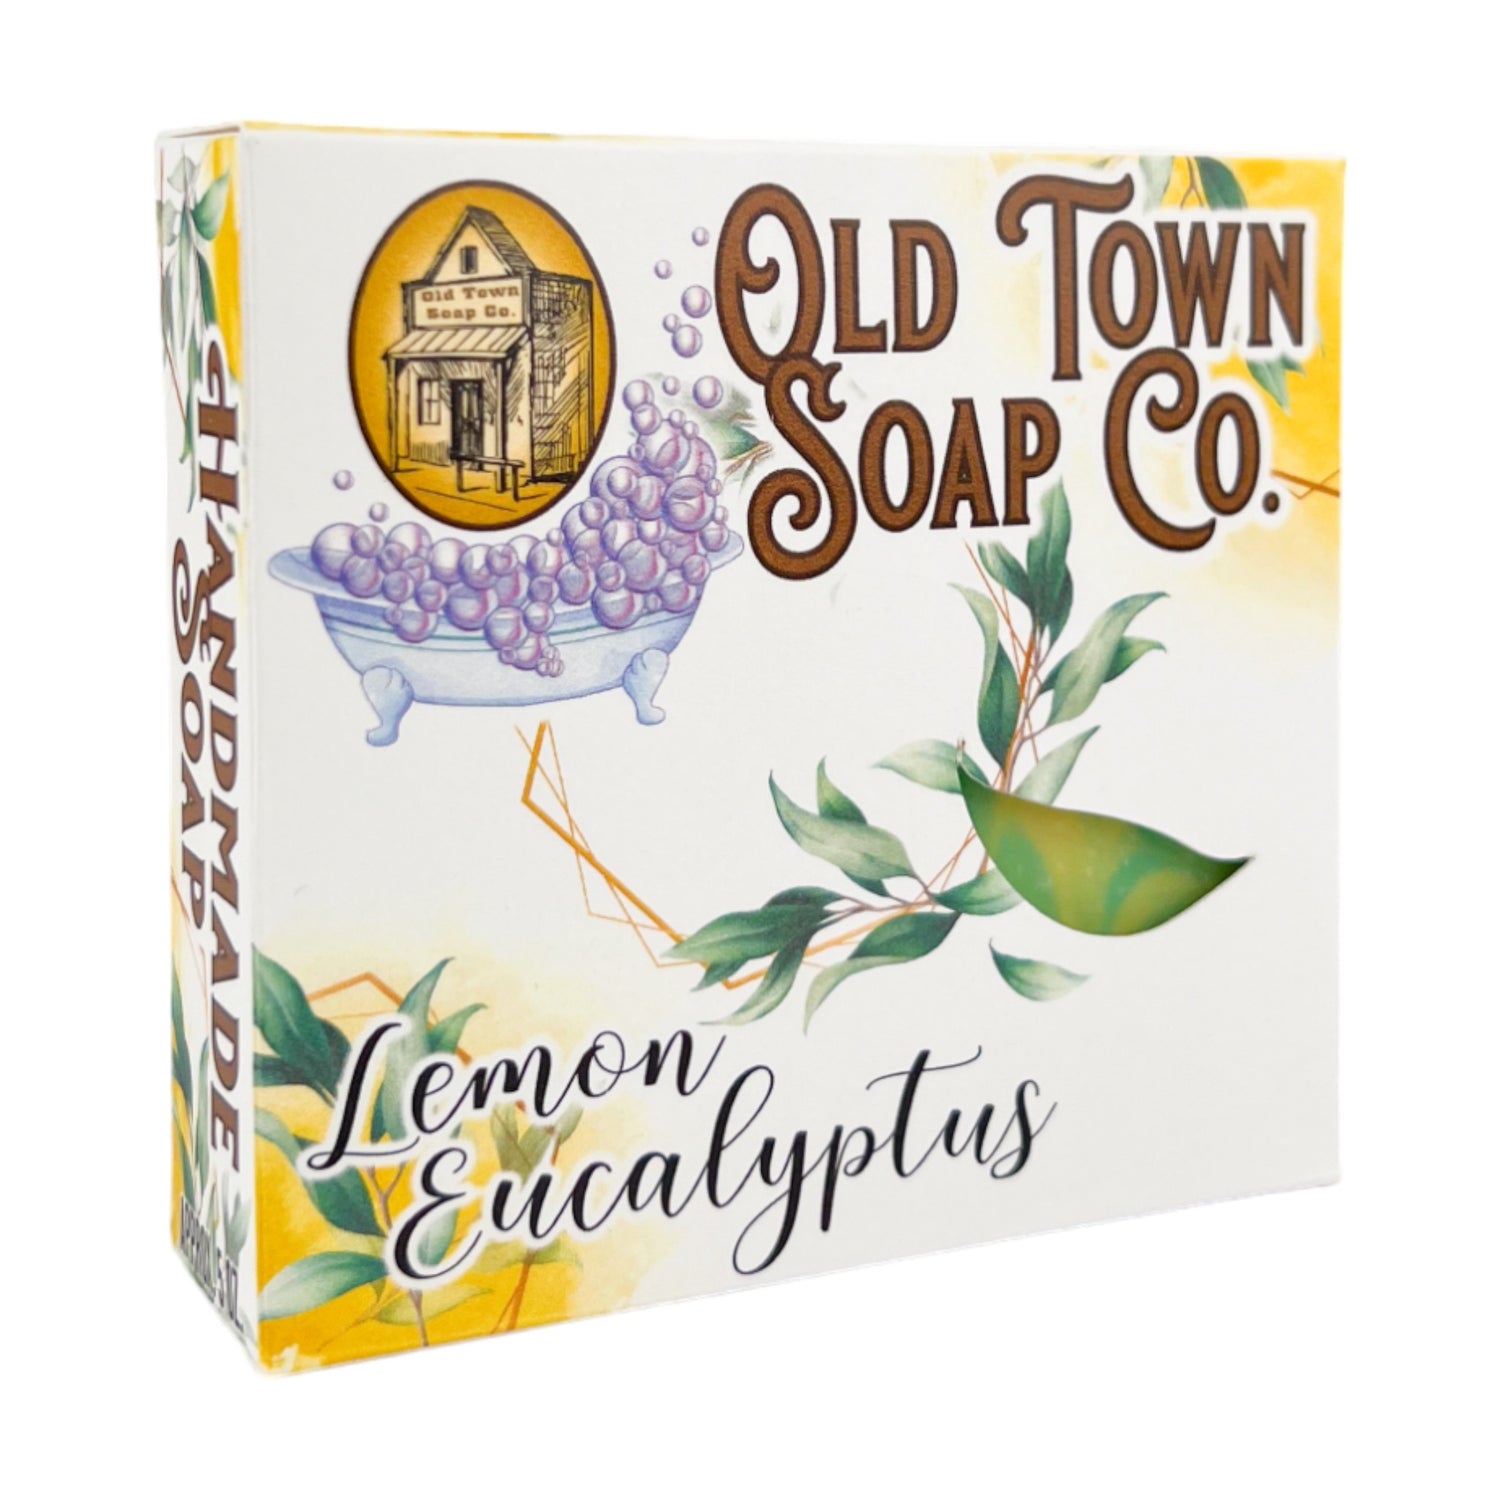 Lemon Eucalyptus -Bar Soap - Old Town Soap Co.